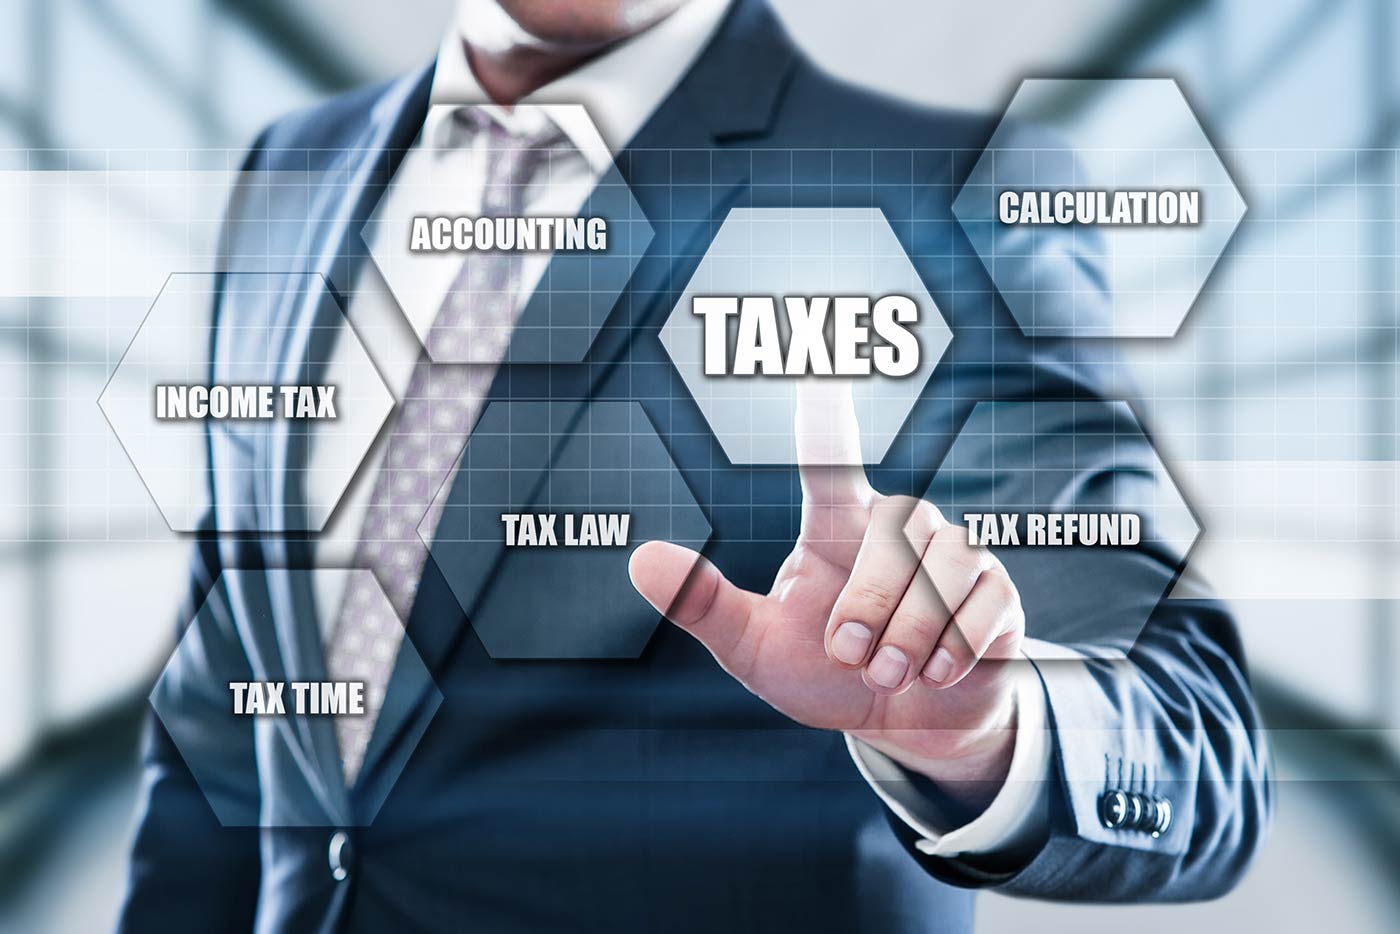 Tax Garnishment Services for IRS Wage Garnishment Help